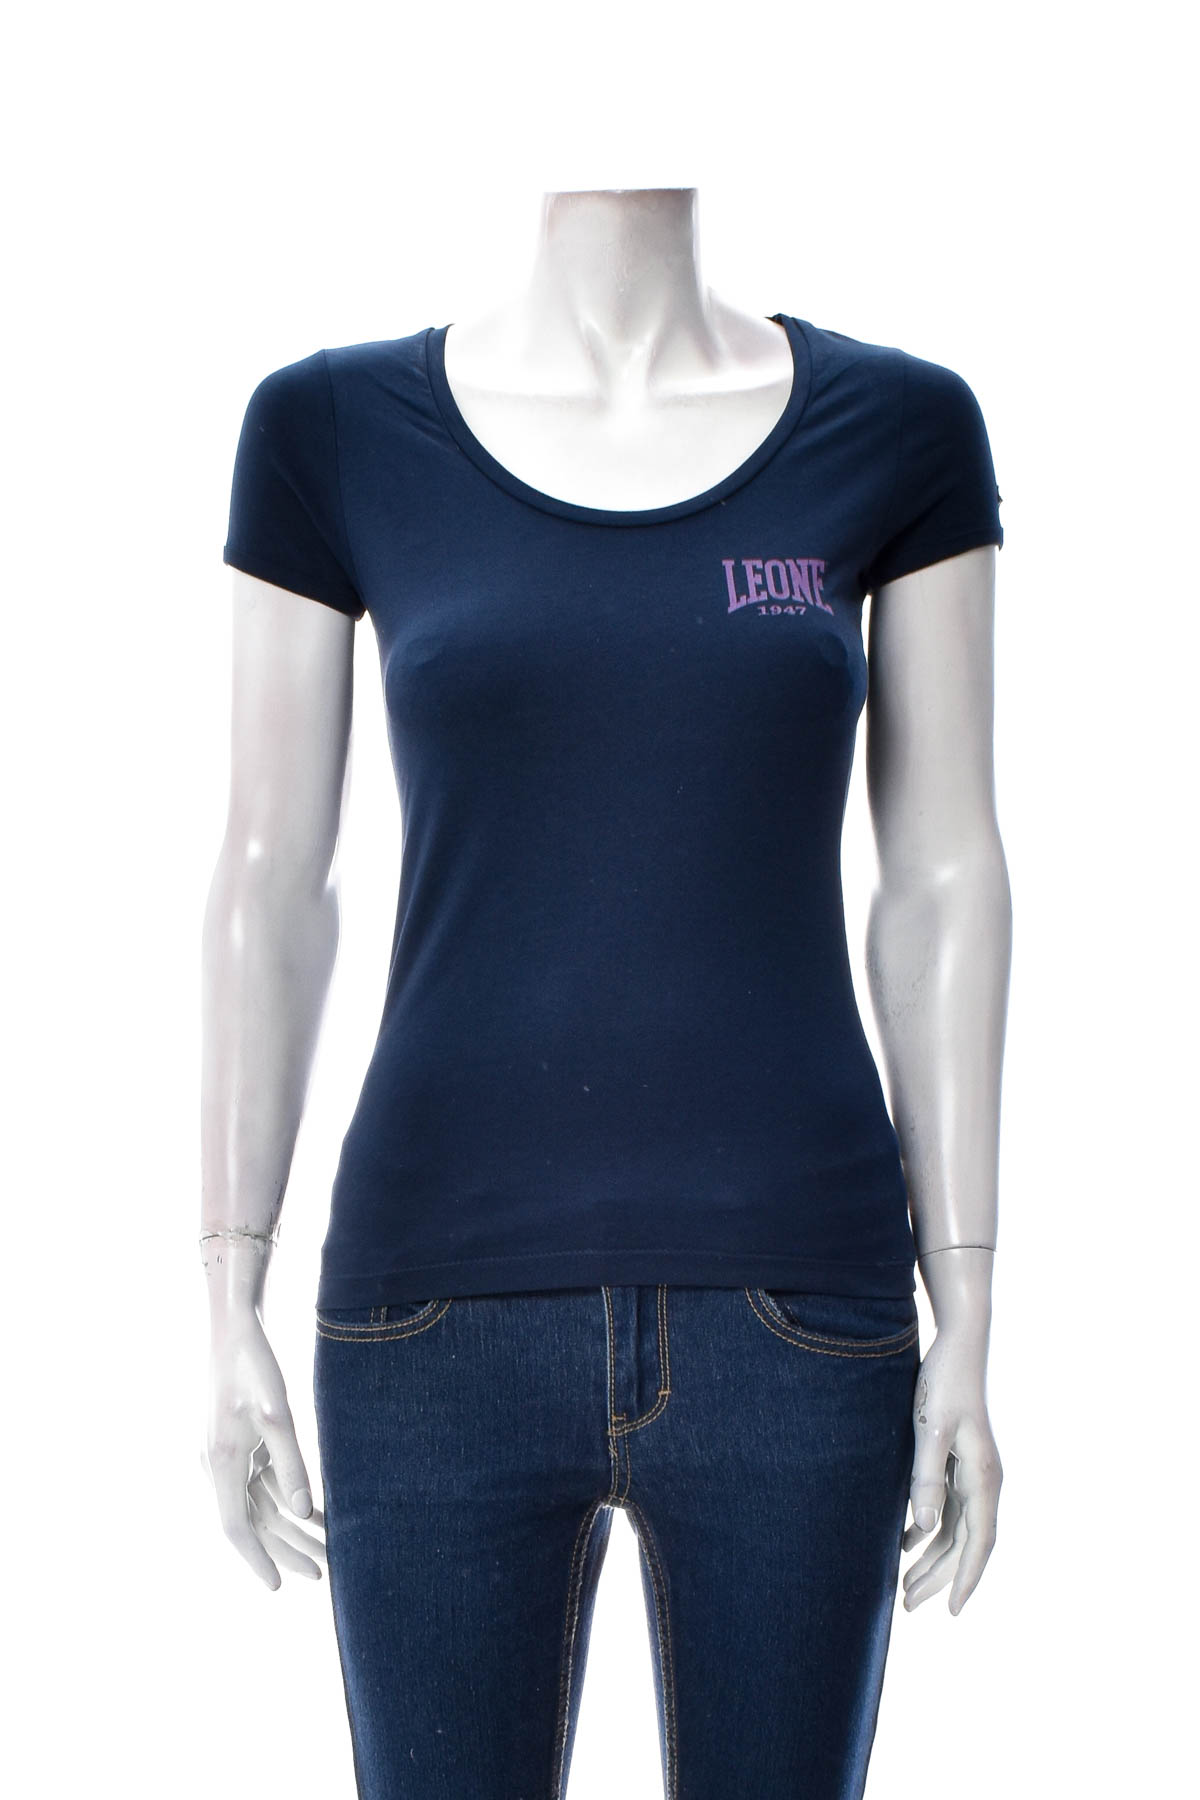 Women's t-shirt - Leone - 0